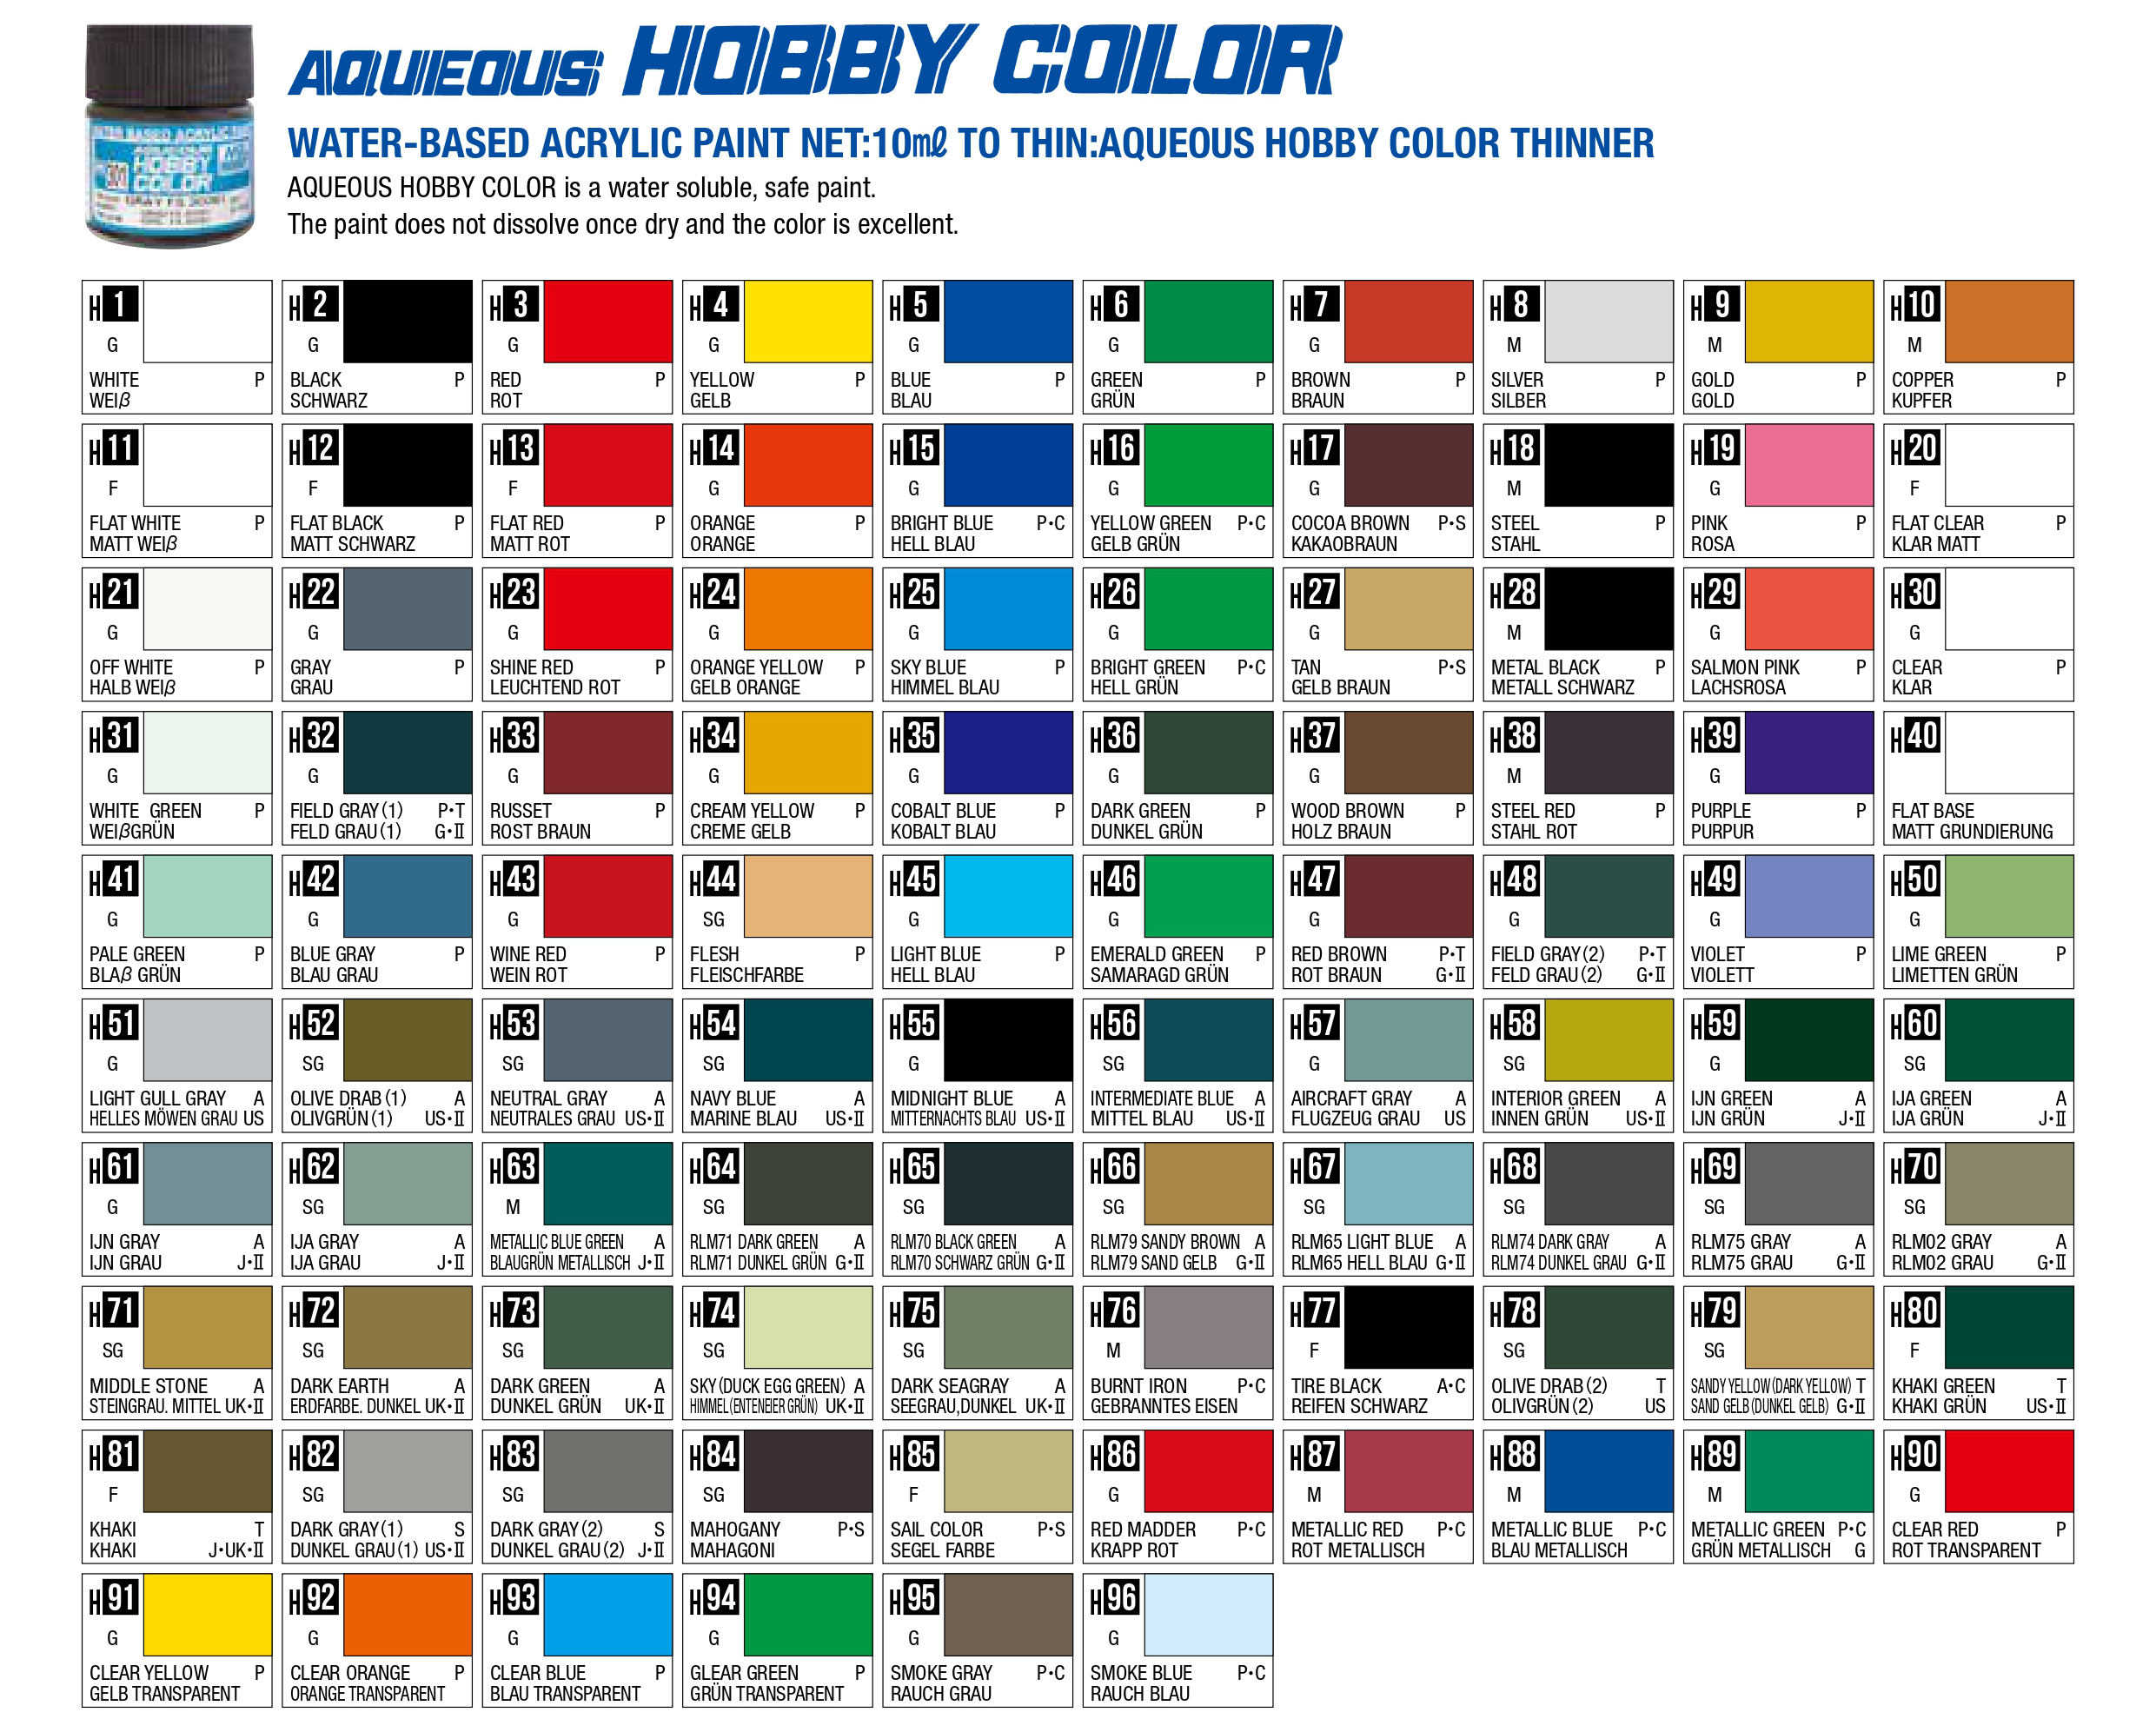 Mr Hobby Aqueous Color H5 Gloss Blue 10ml Bottle